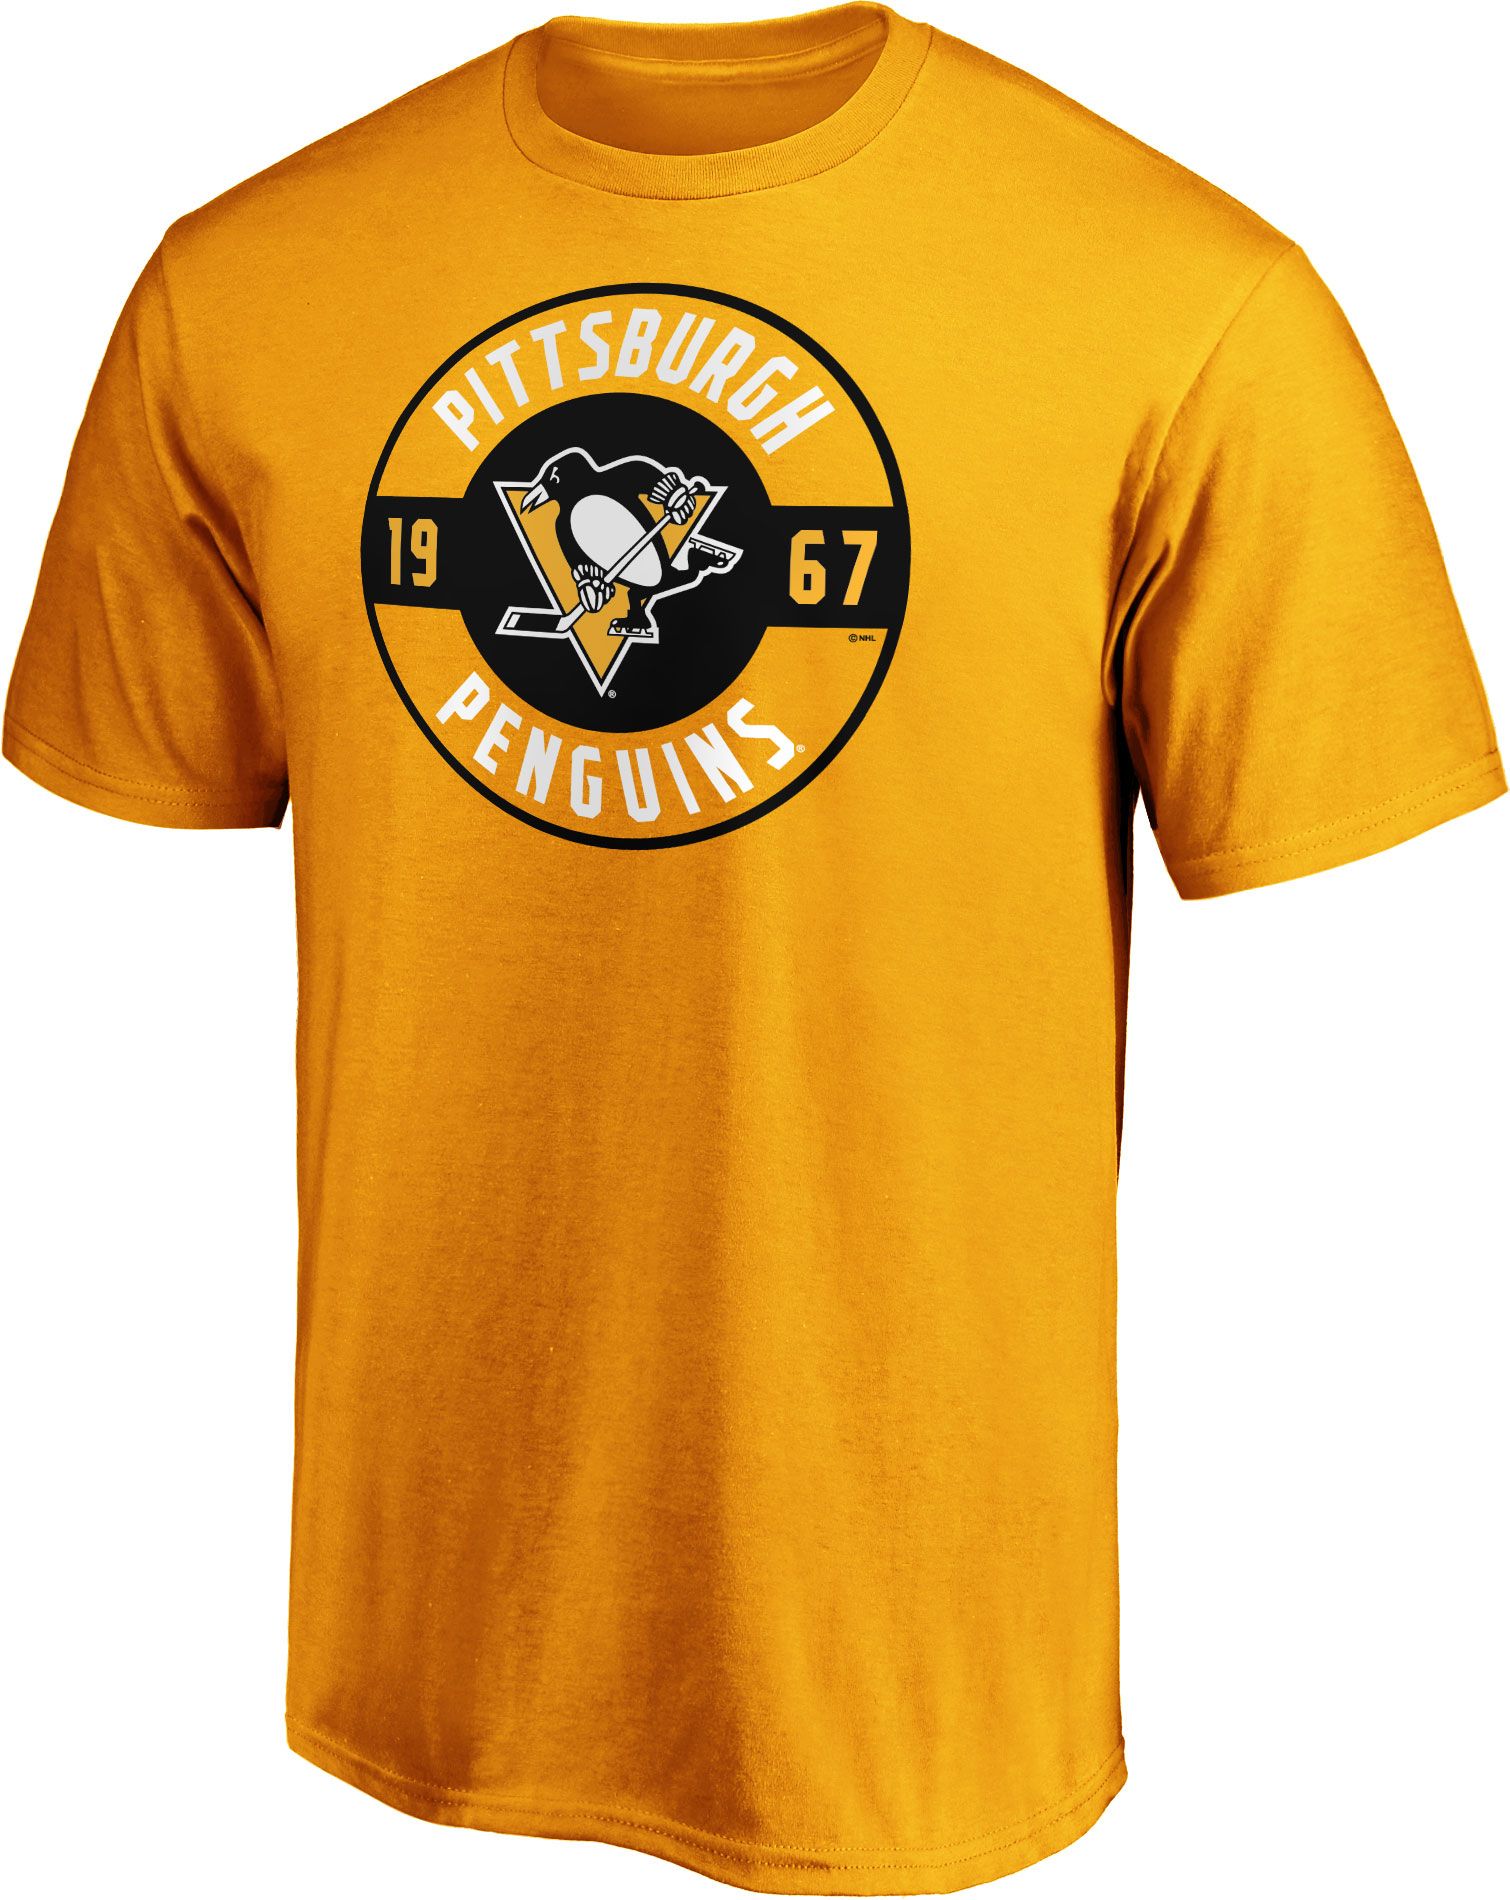 Nashville Predators Fanatics Branded Hometown Graphic T-Shirt - Mens